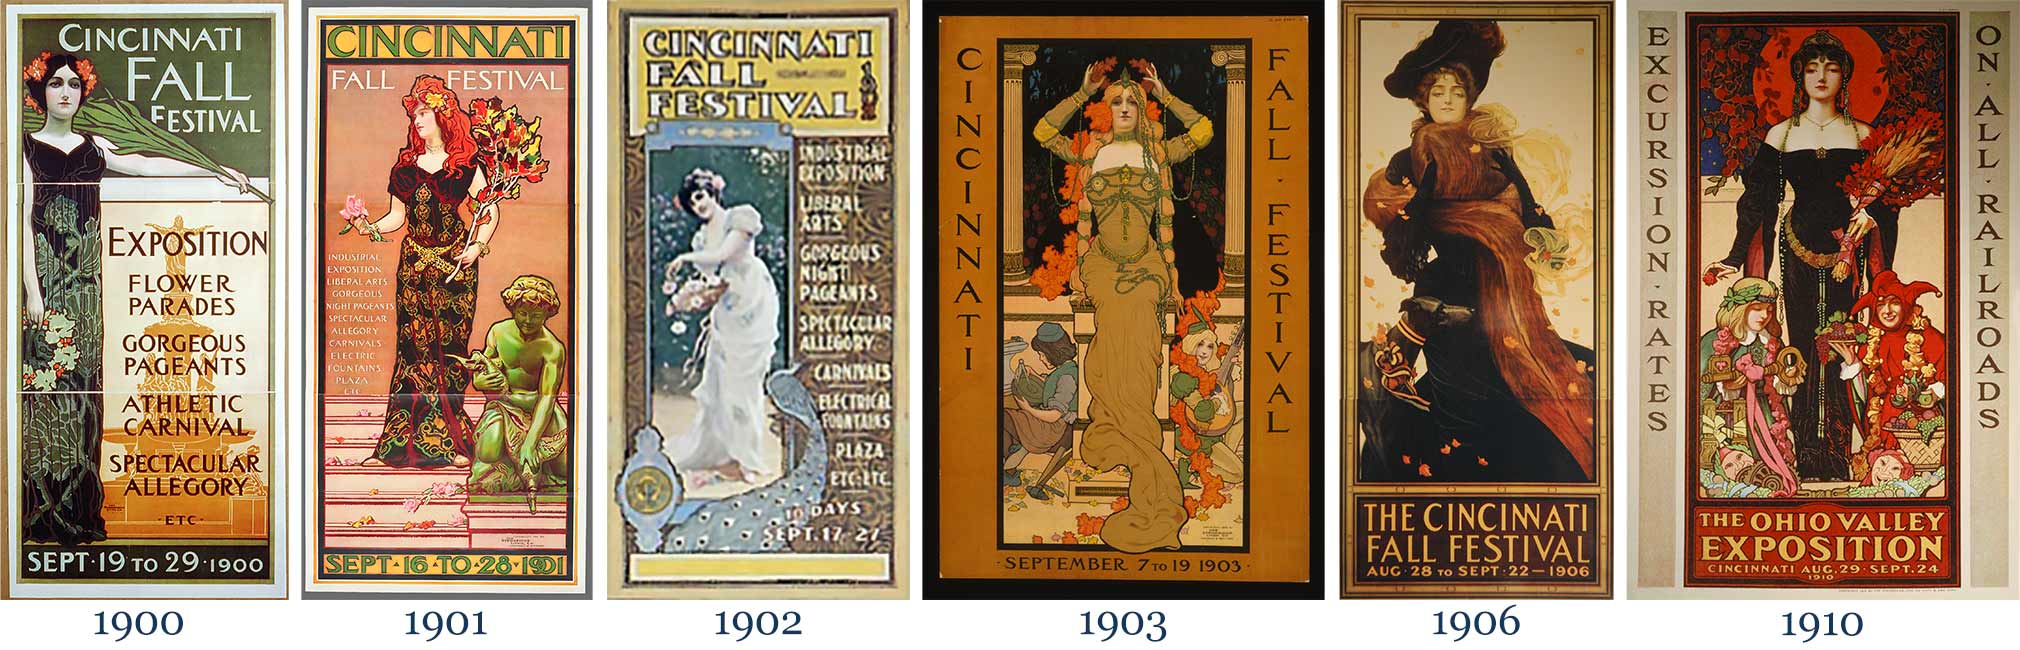 Cincinnati Fall Festival Posters, 1900 through 1910.